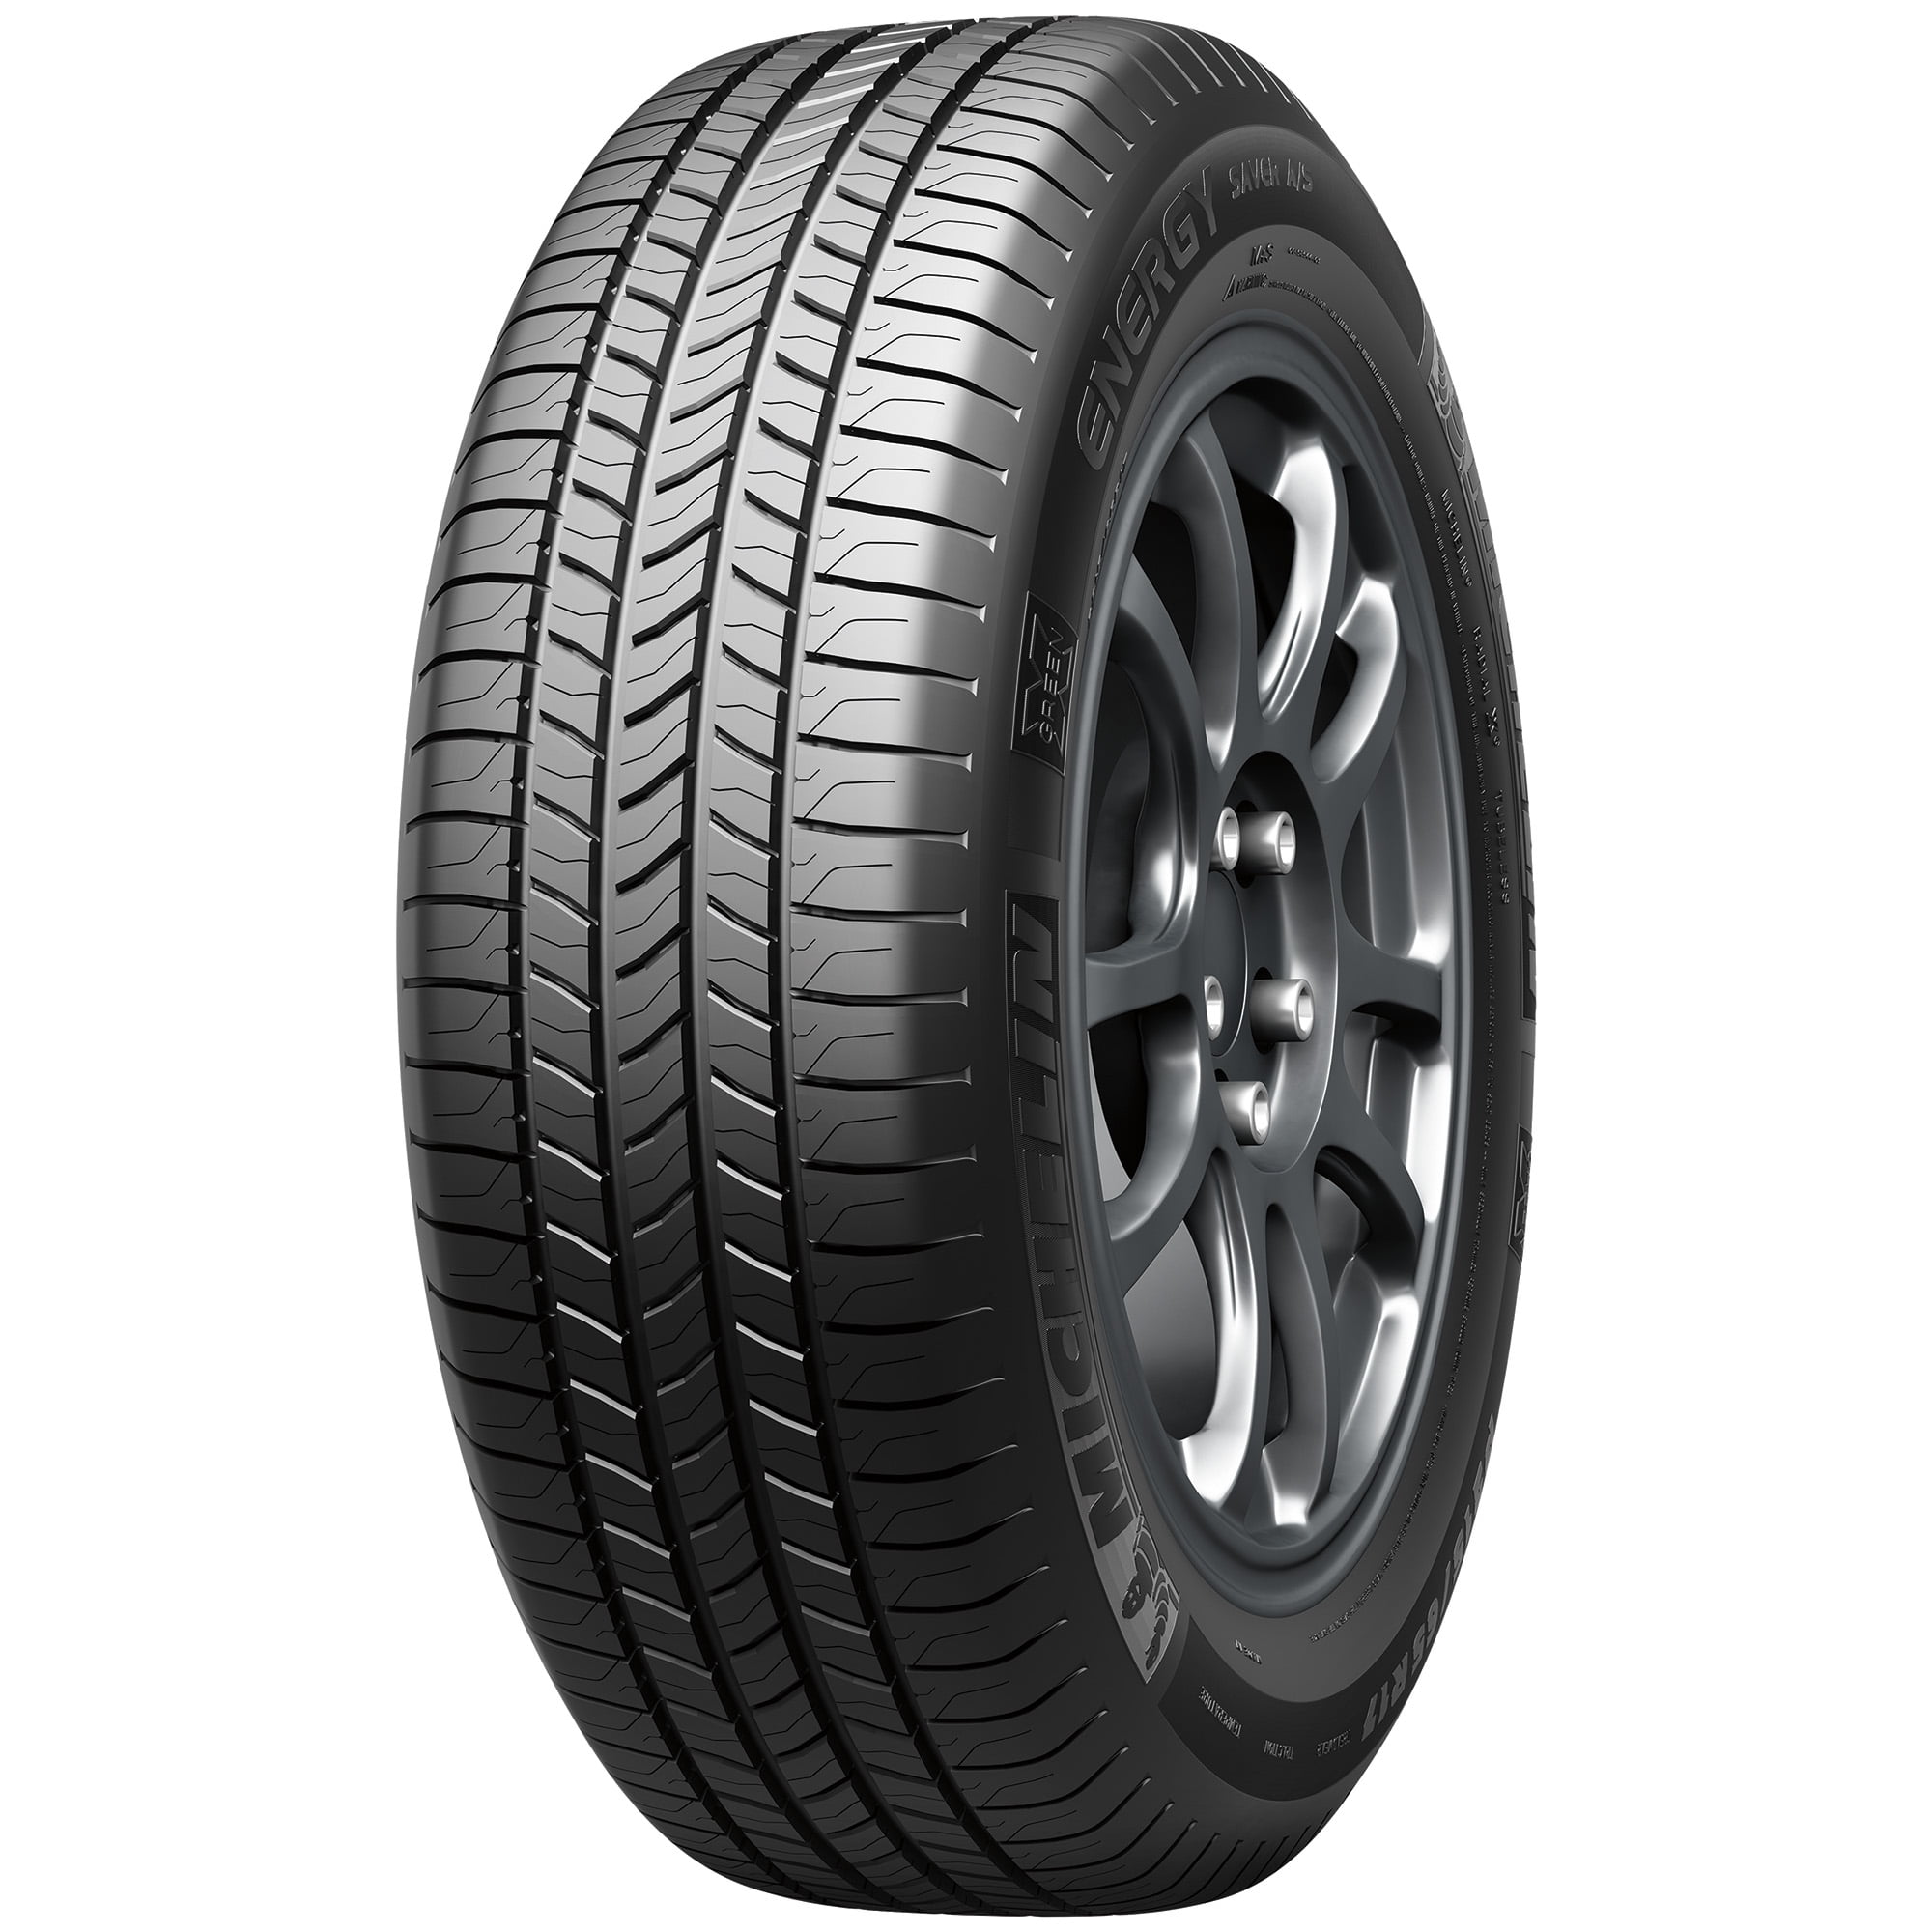 All-Season 215/50R17 Michelin Energy Tire A/S Saver 91H